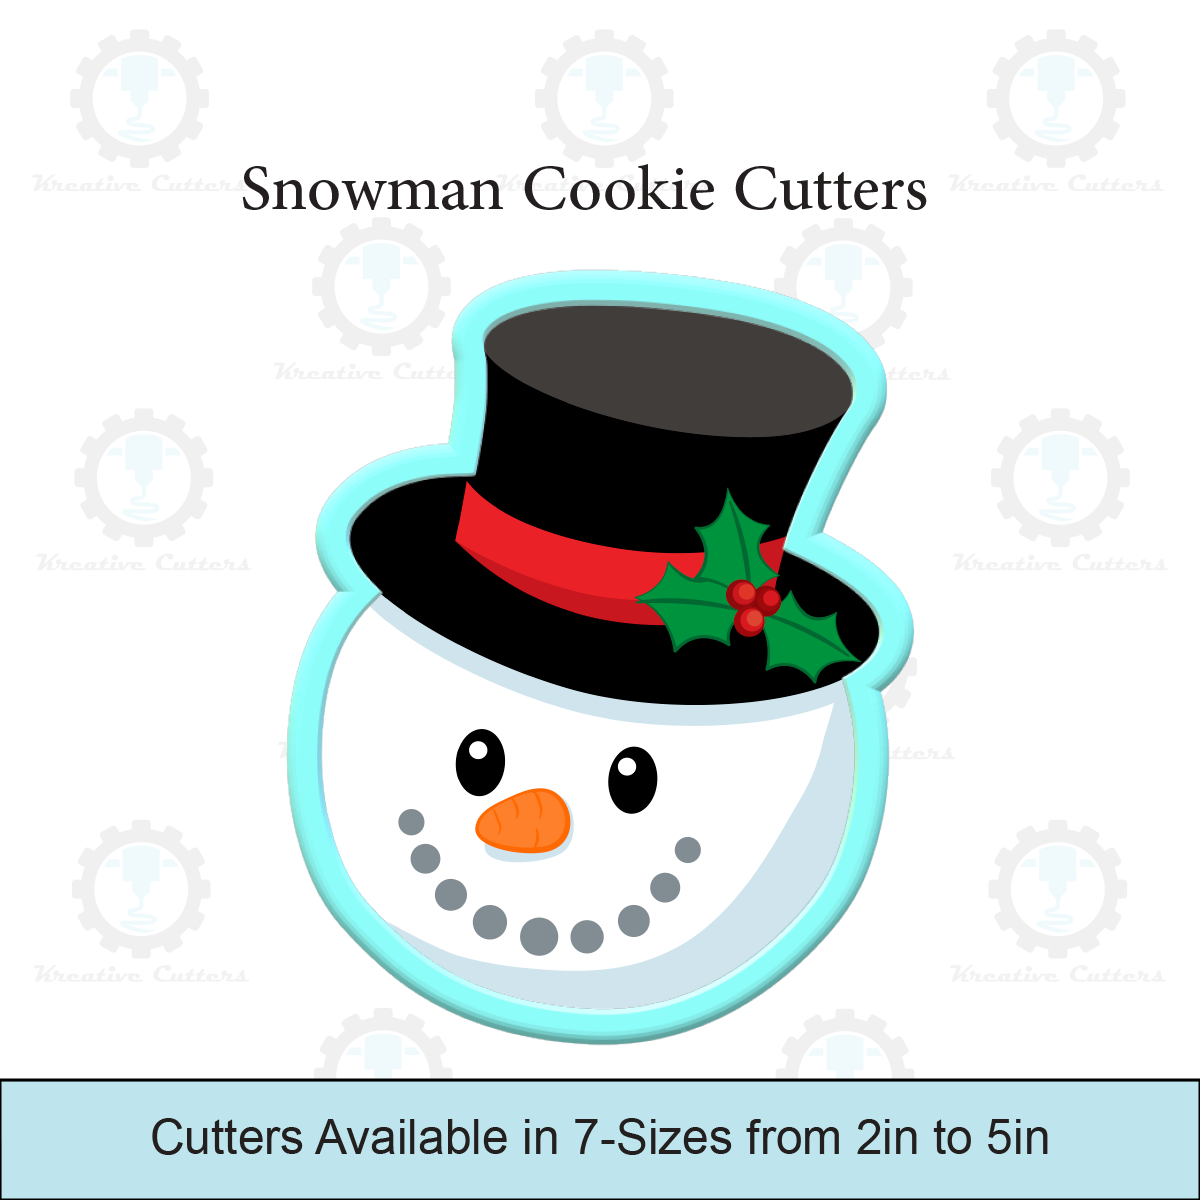 Snowman Cookie Cutters